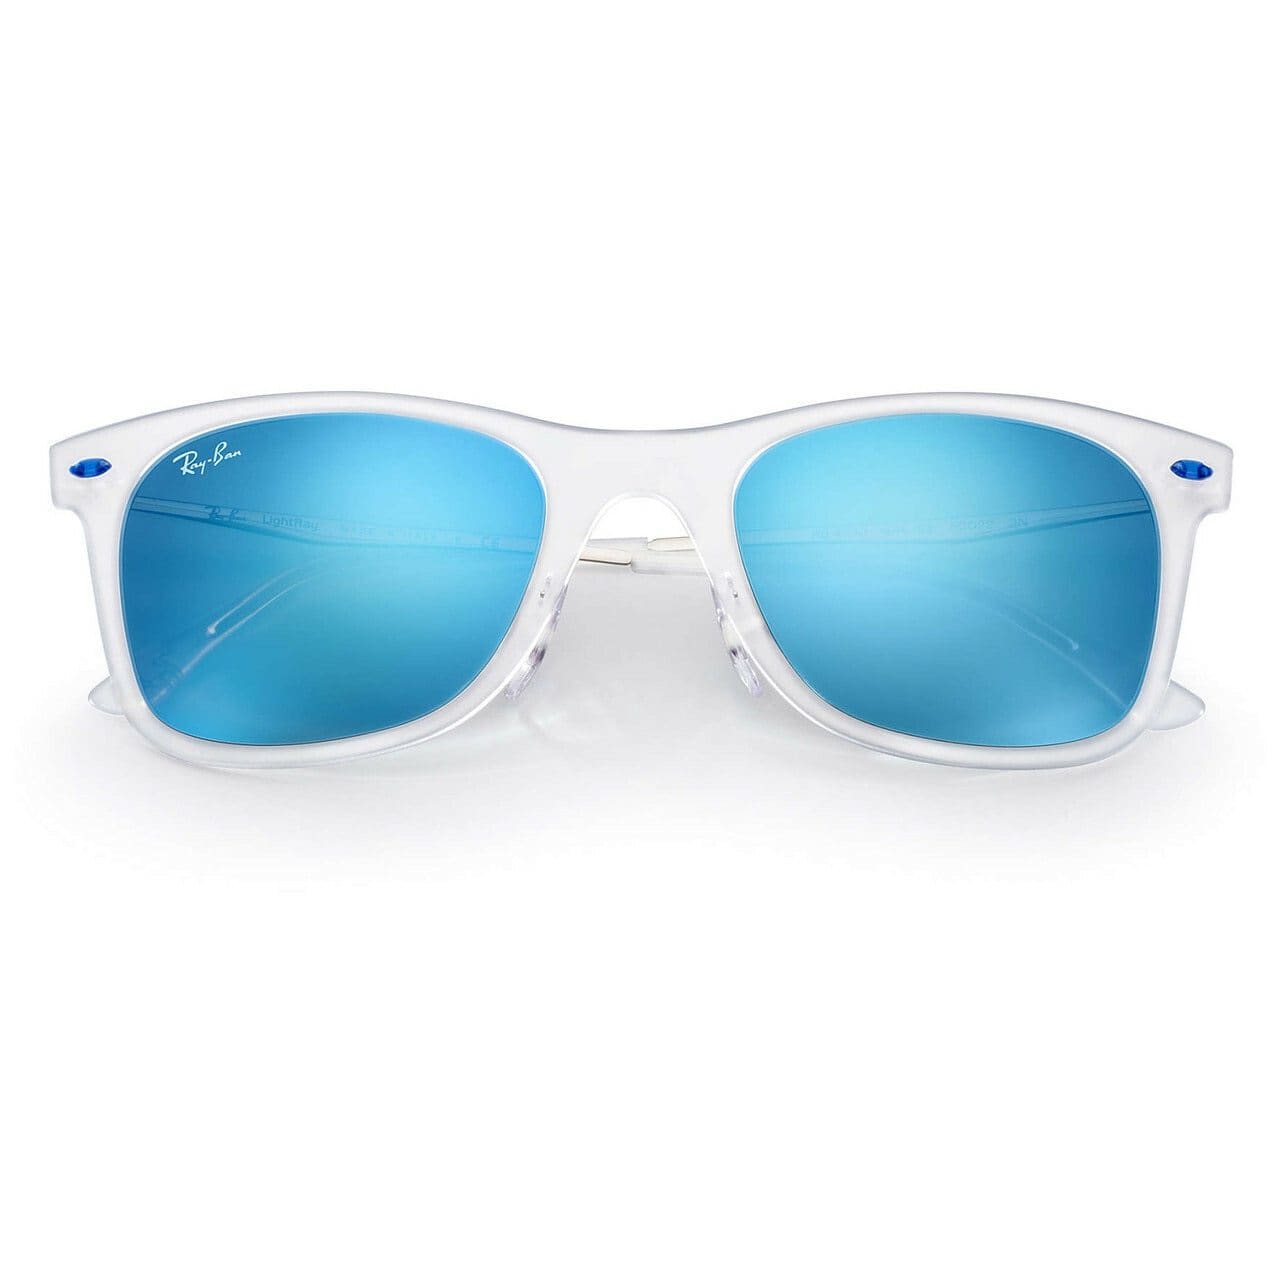 Ray-Ban RB4210 646/55 Wayfarer Light Ray Sunglasses Titanium Silver Tone Frame With Blue Mirror Lens 8053672301199